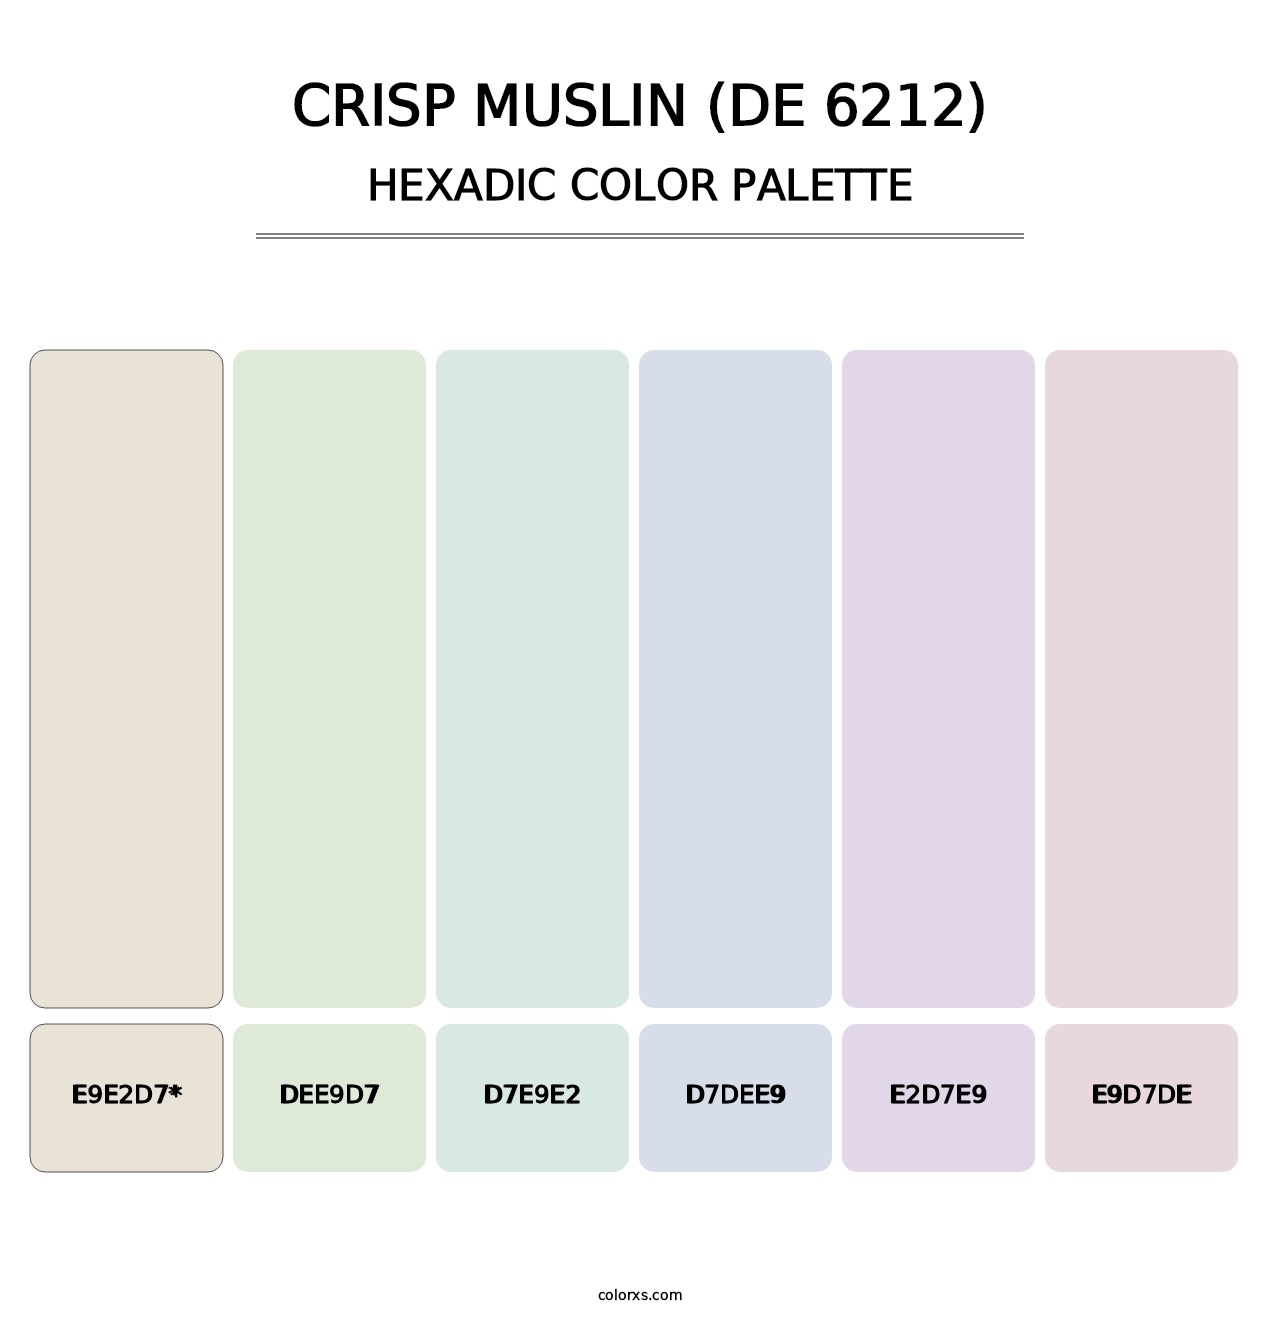 Crisp Muslin (DE 6212) - Hexadic Color Palette